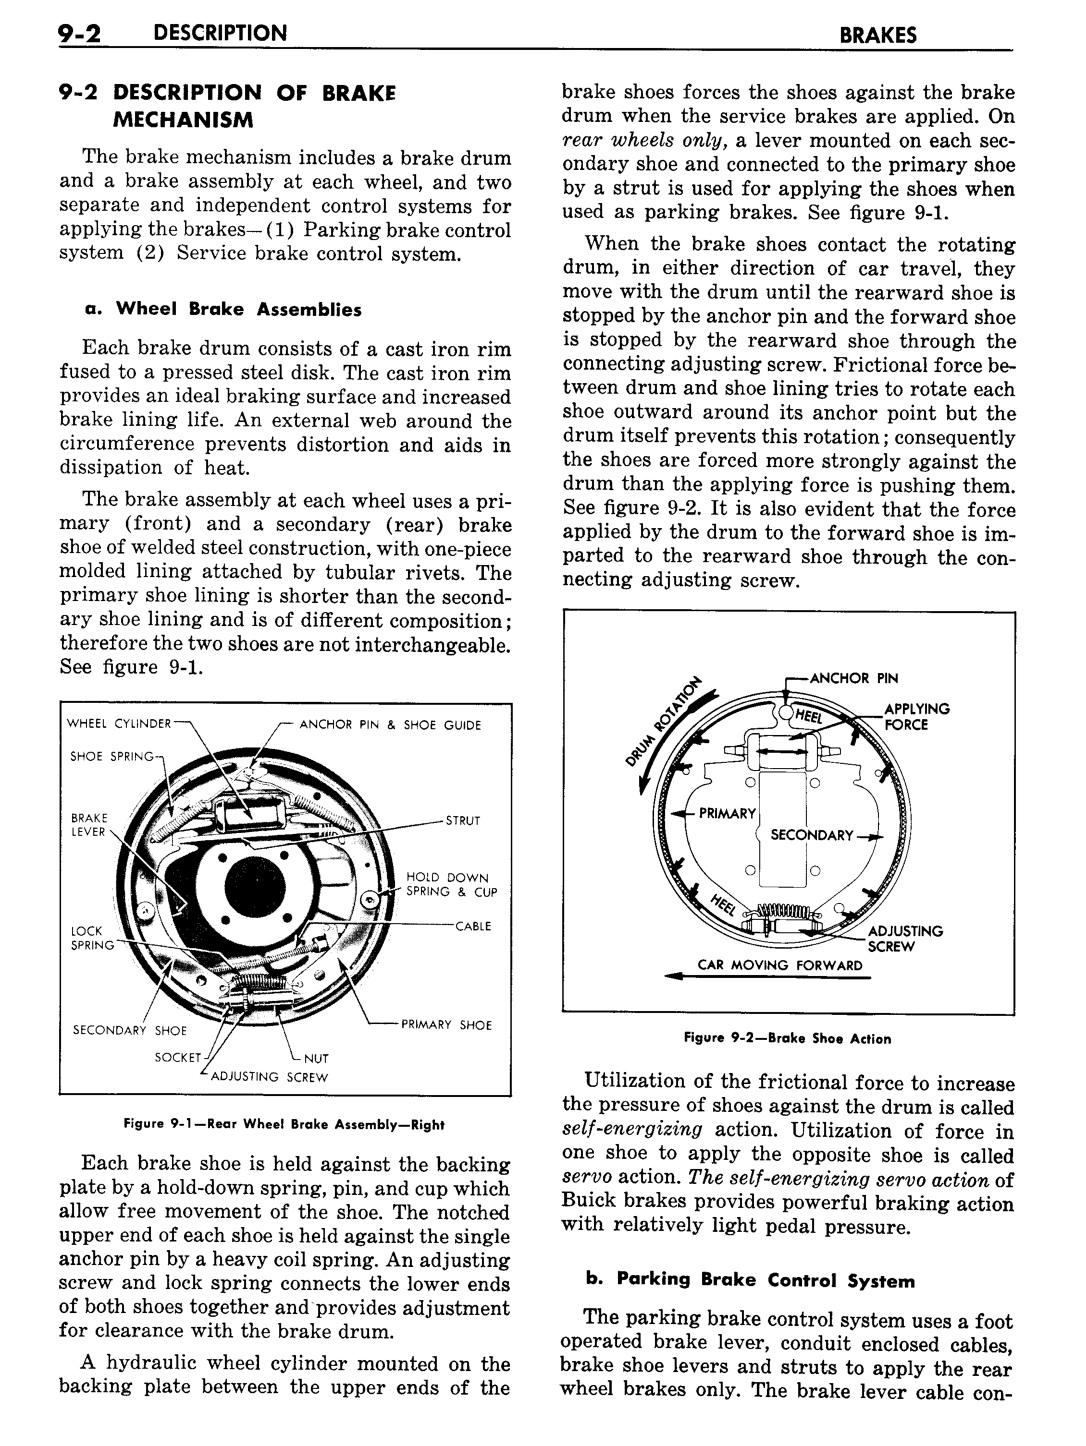 n_10 1957 Buick Shop Manual - Brakes-002-002.jpg